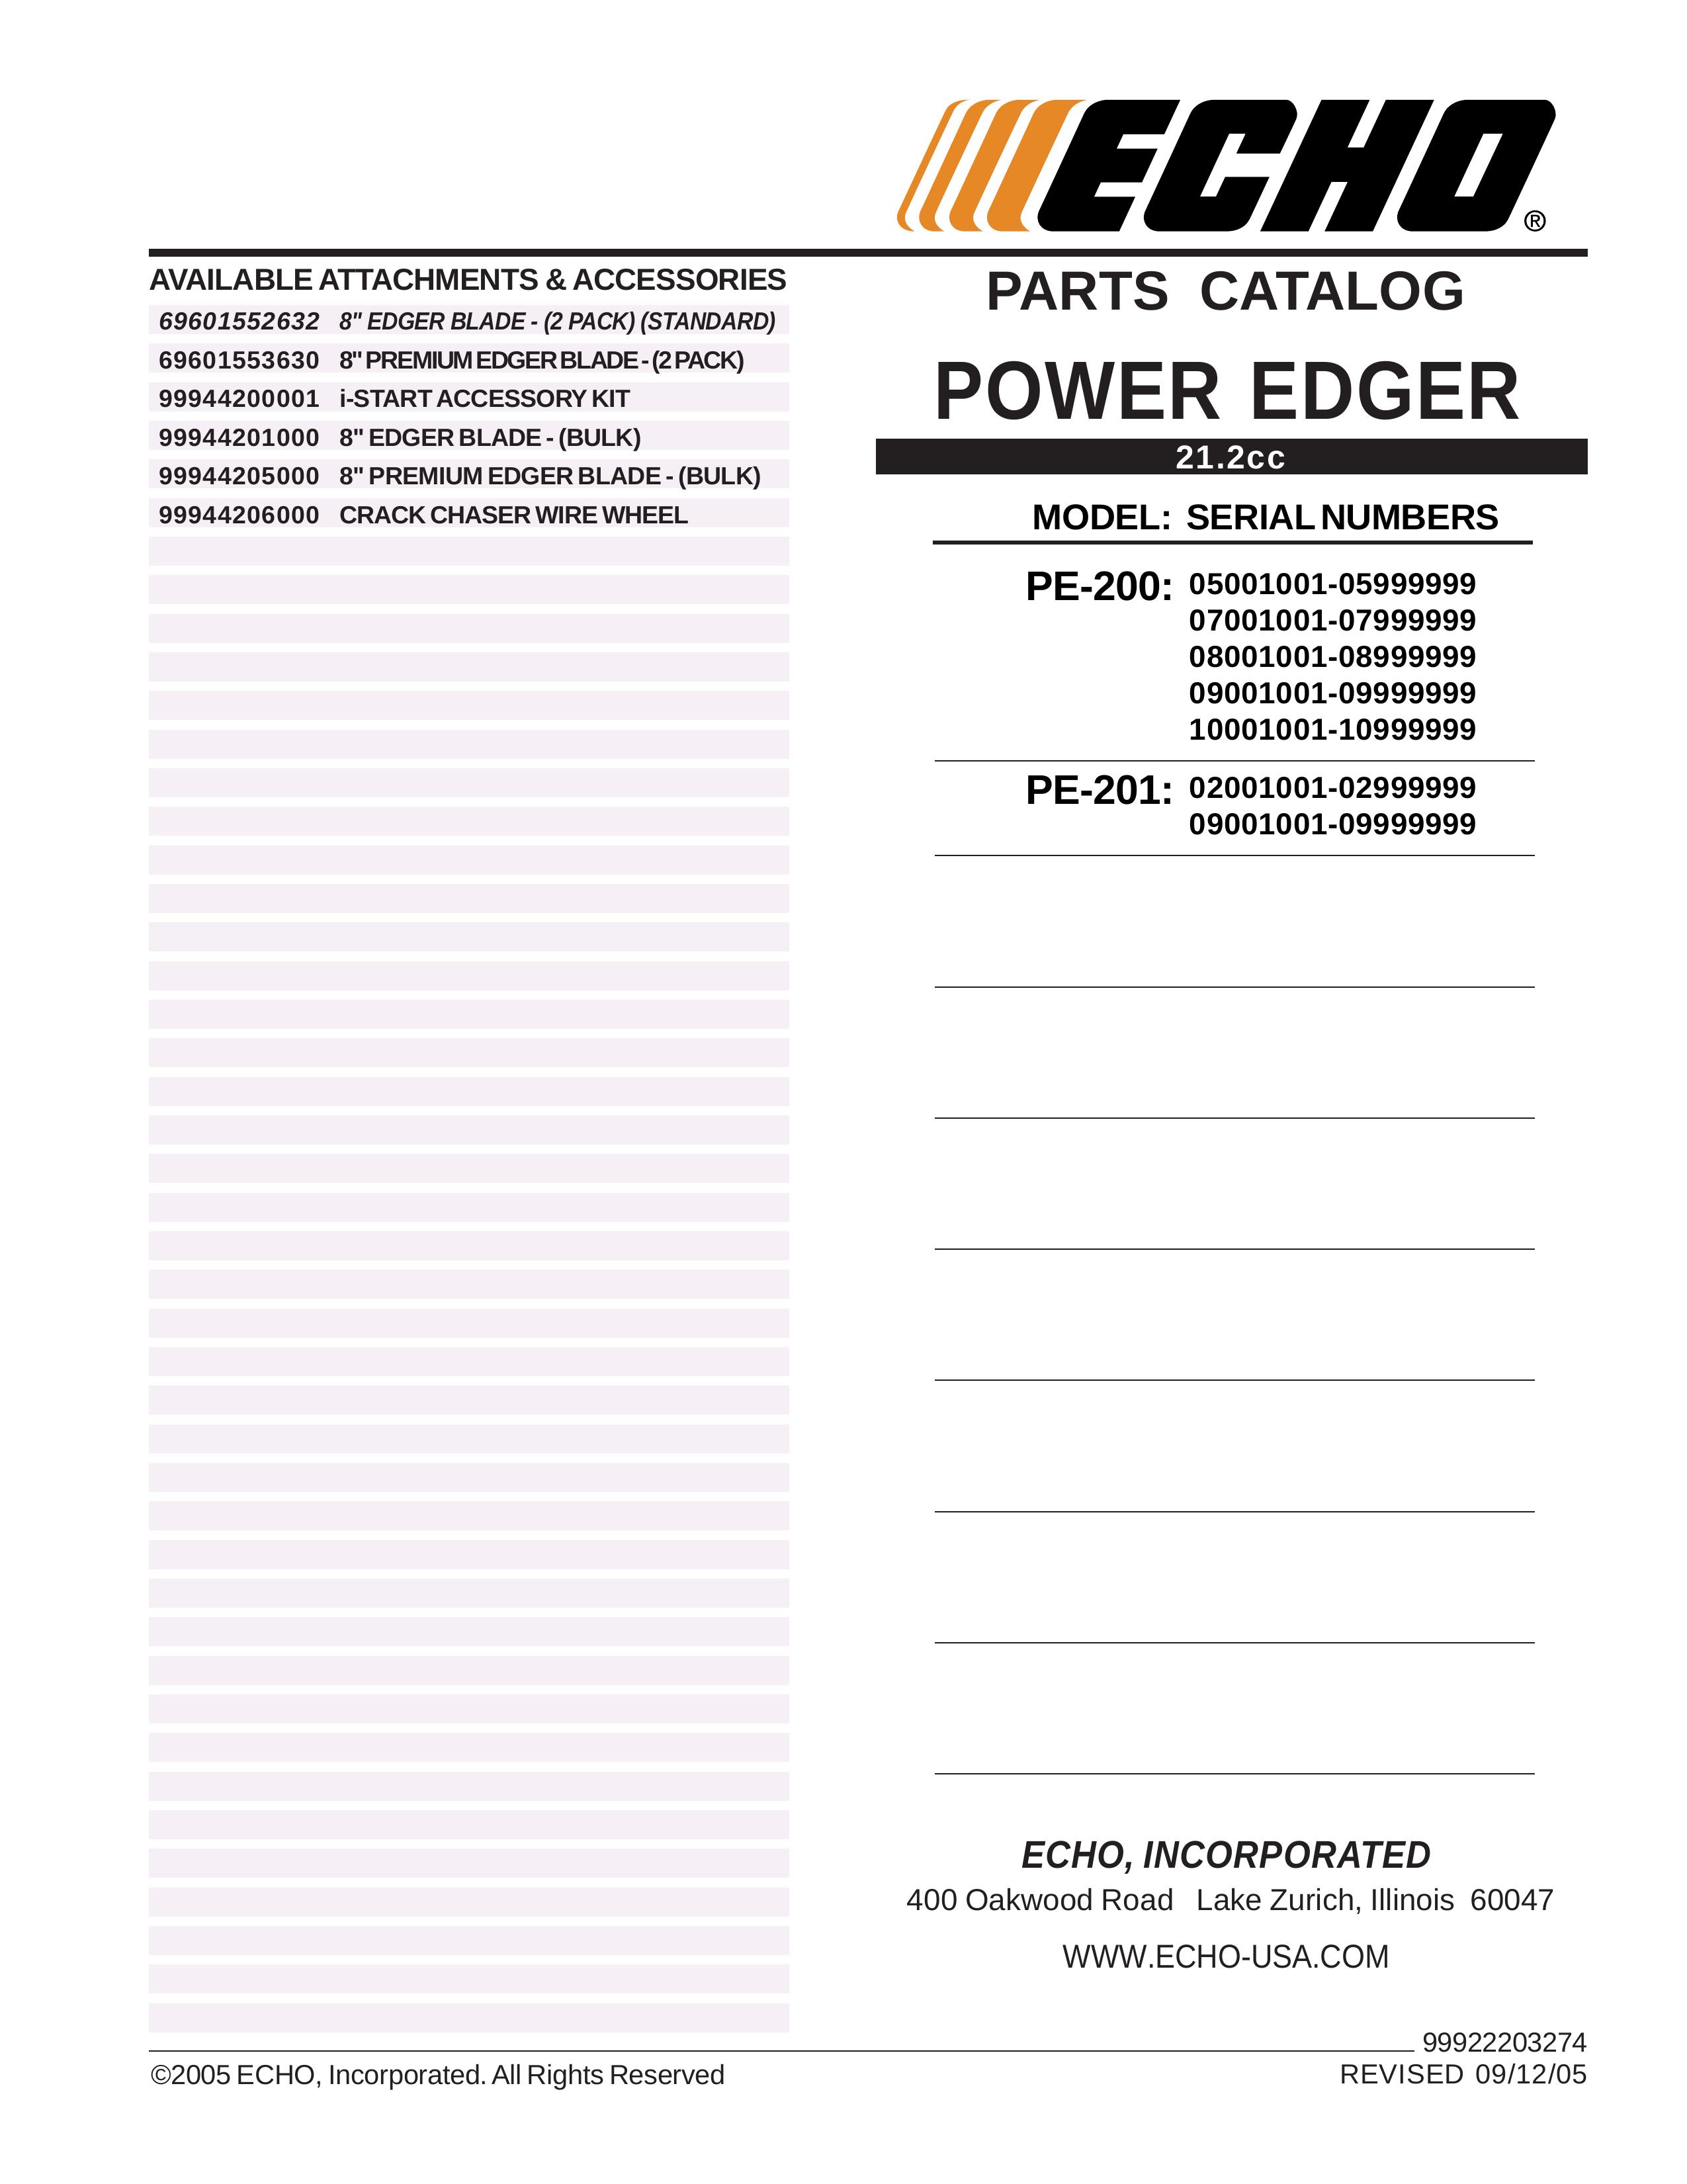 Echo PE-201 Edger User Manual